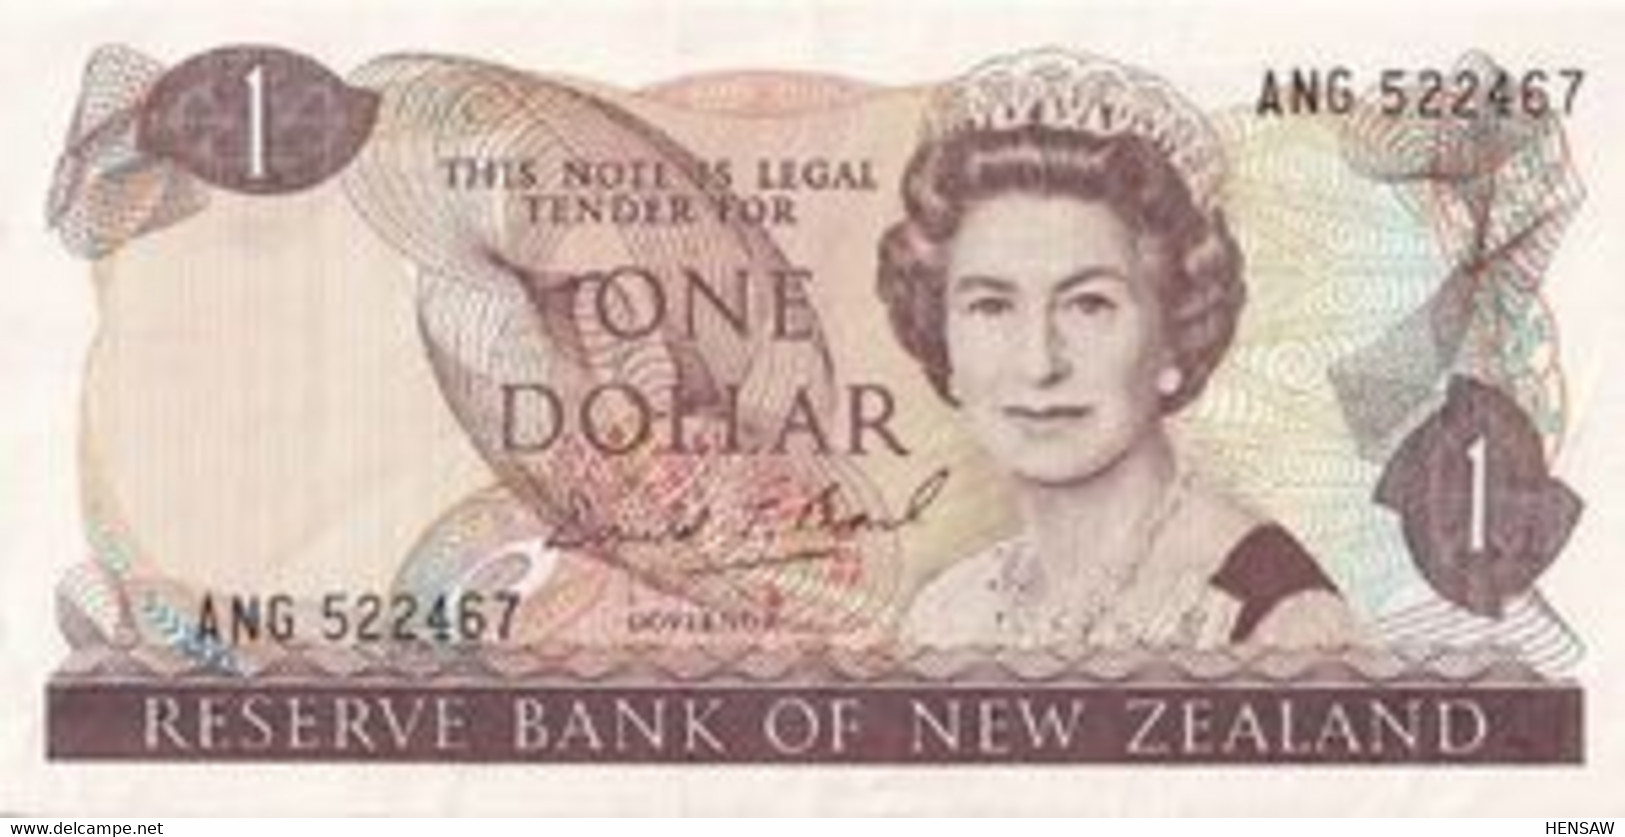 NEW ZEALAND 1 DOLLAR 1985 P 169b UNC SC NUEVO - Nouvelle-Zélande